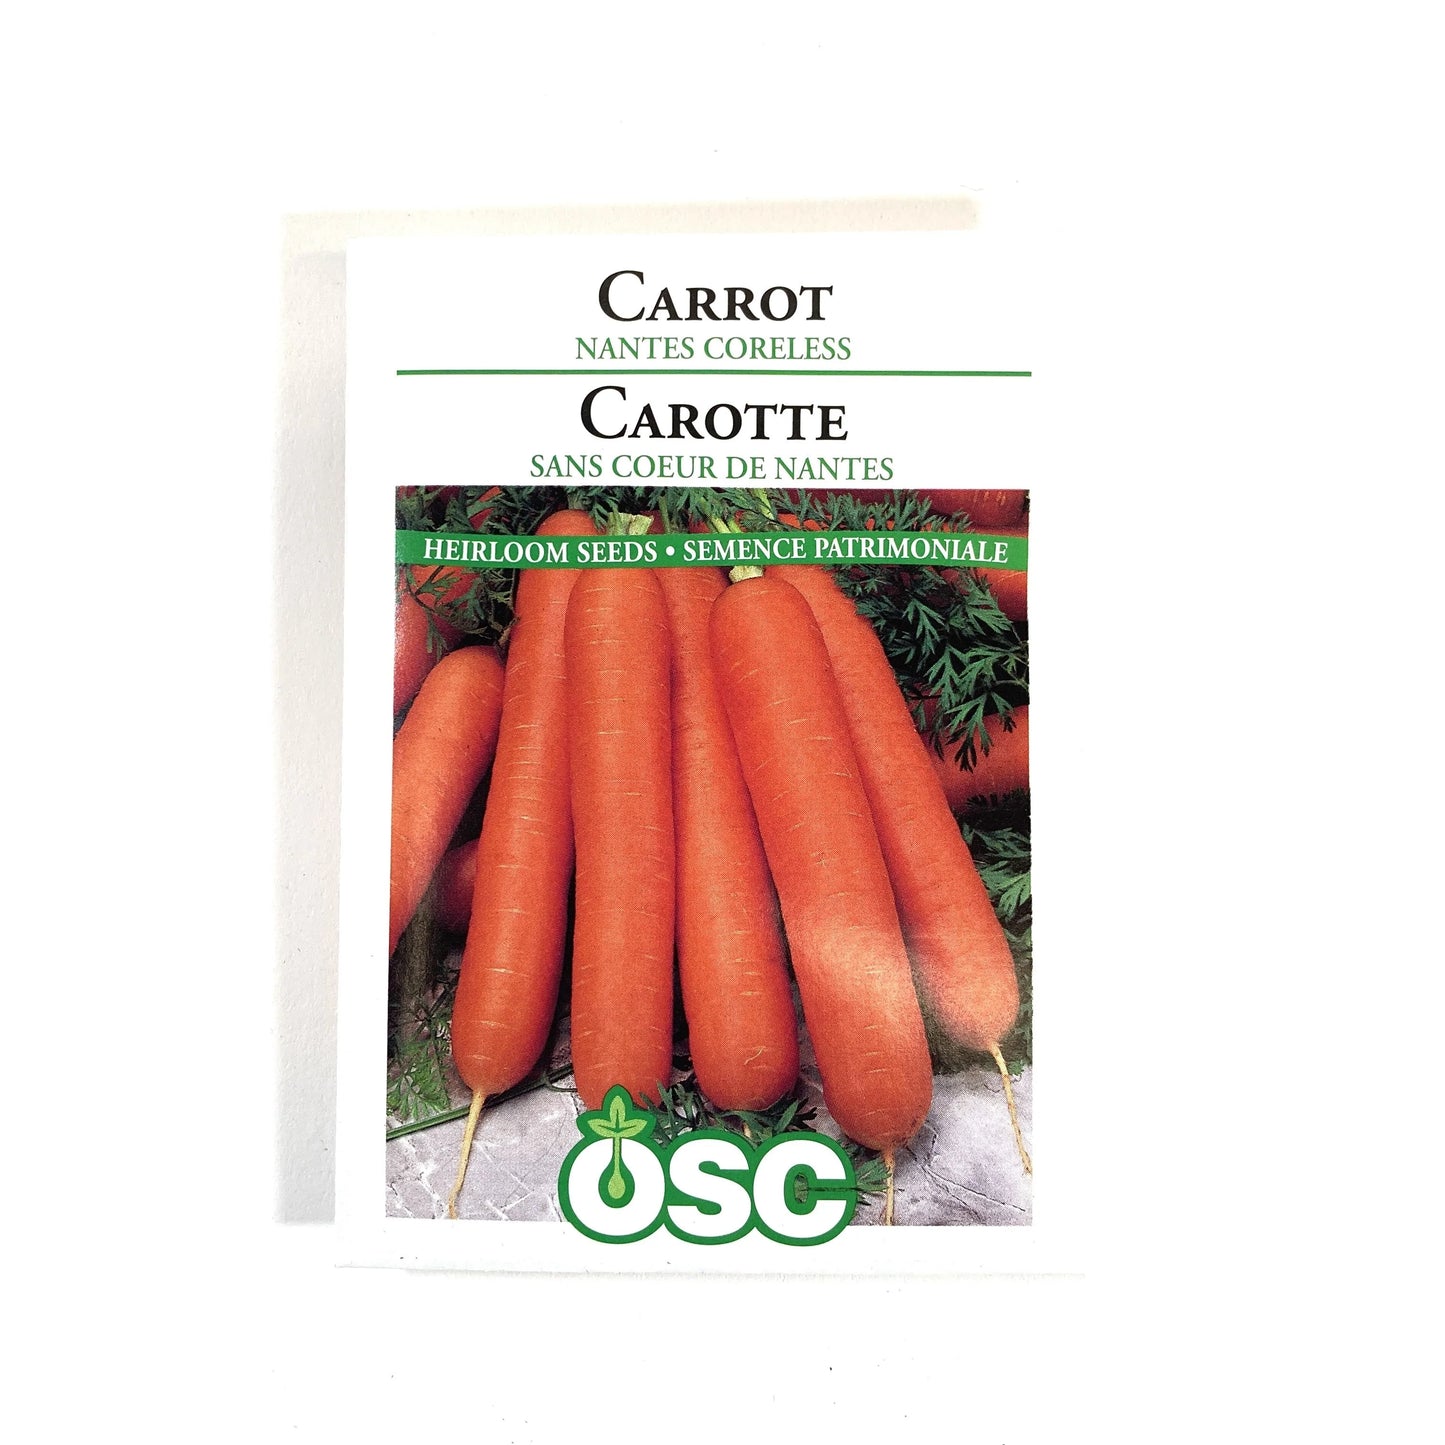 Nantes Coreless Carrots